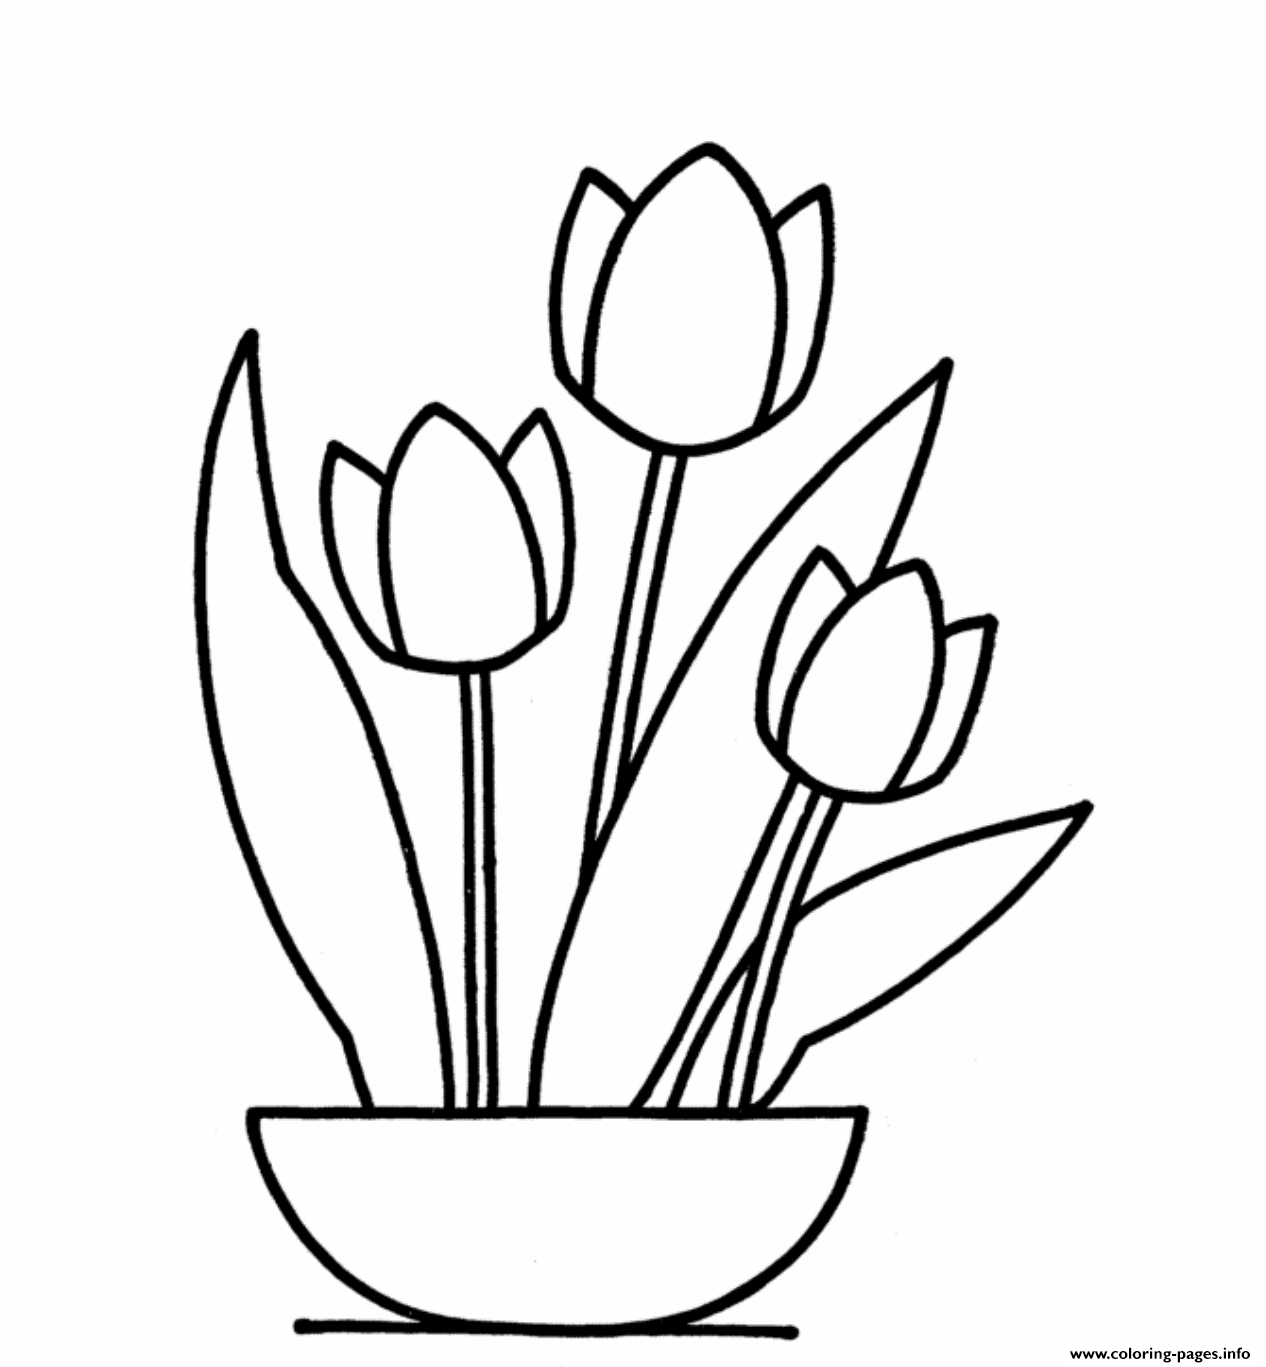 Tulip Flower coloring